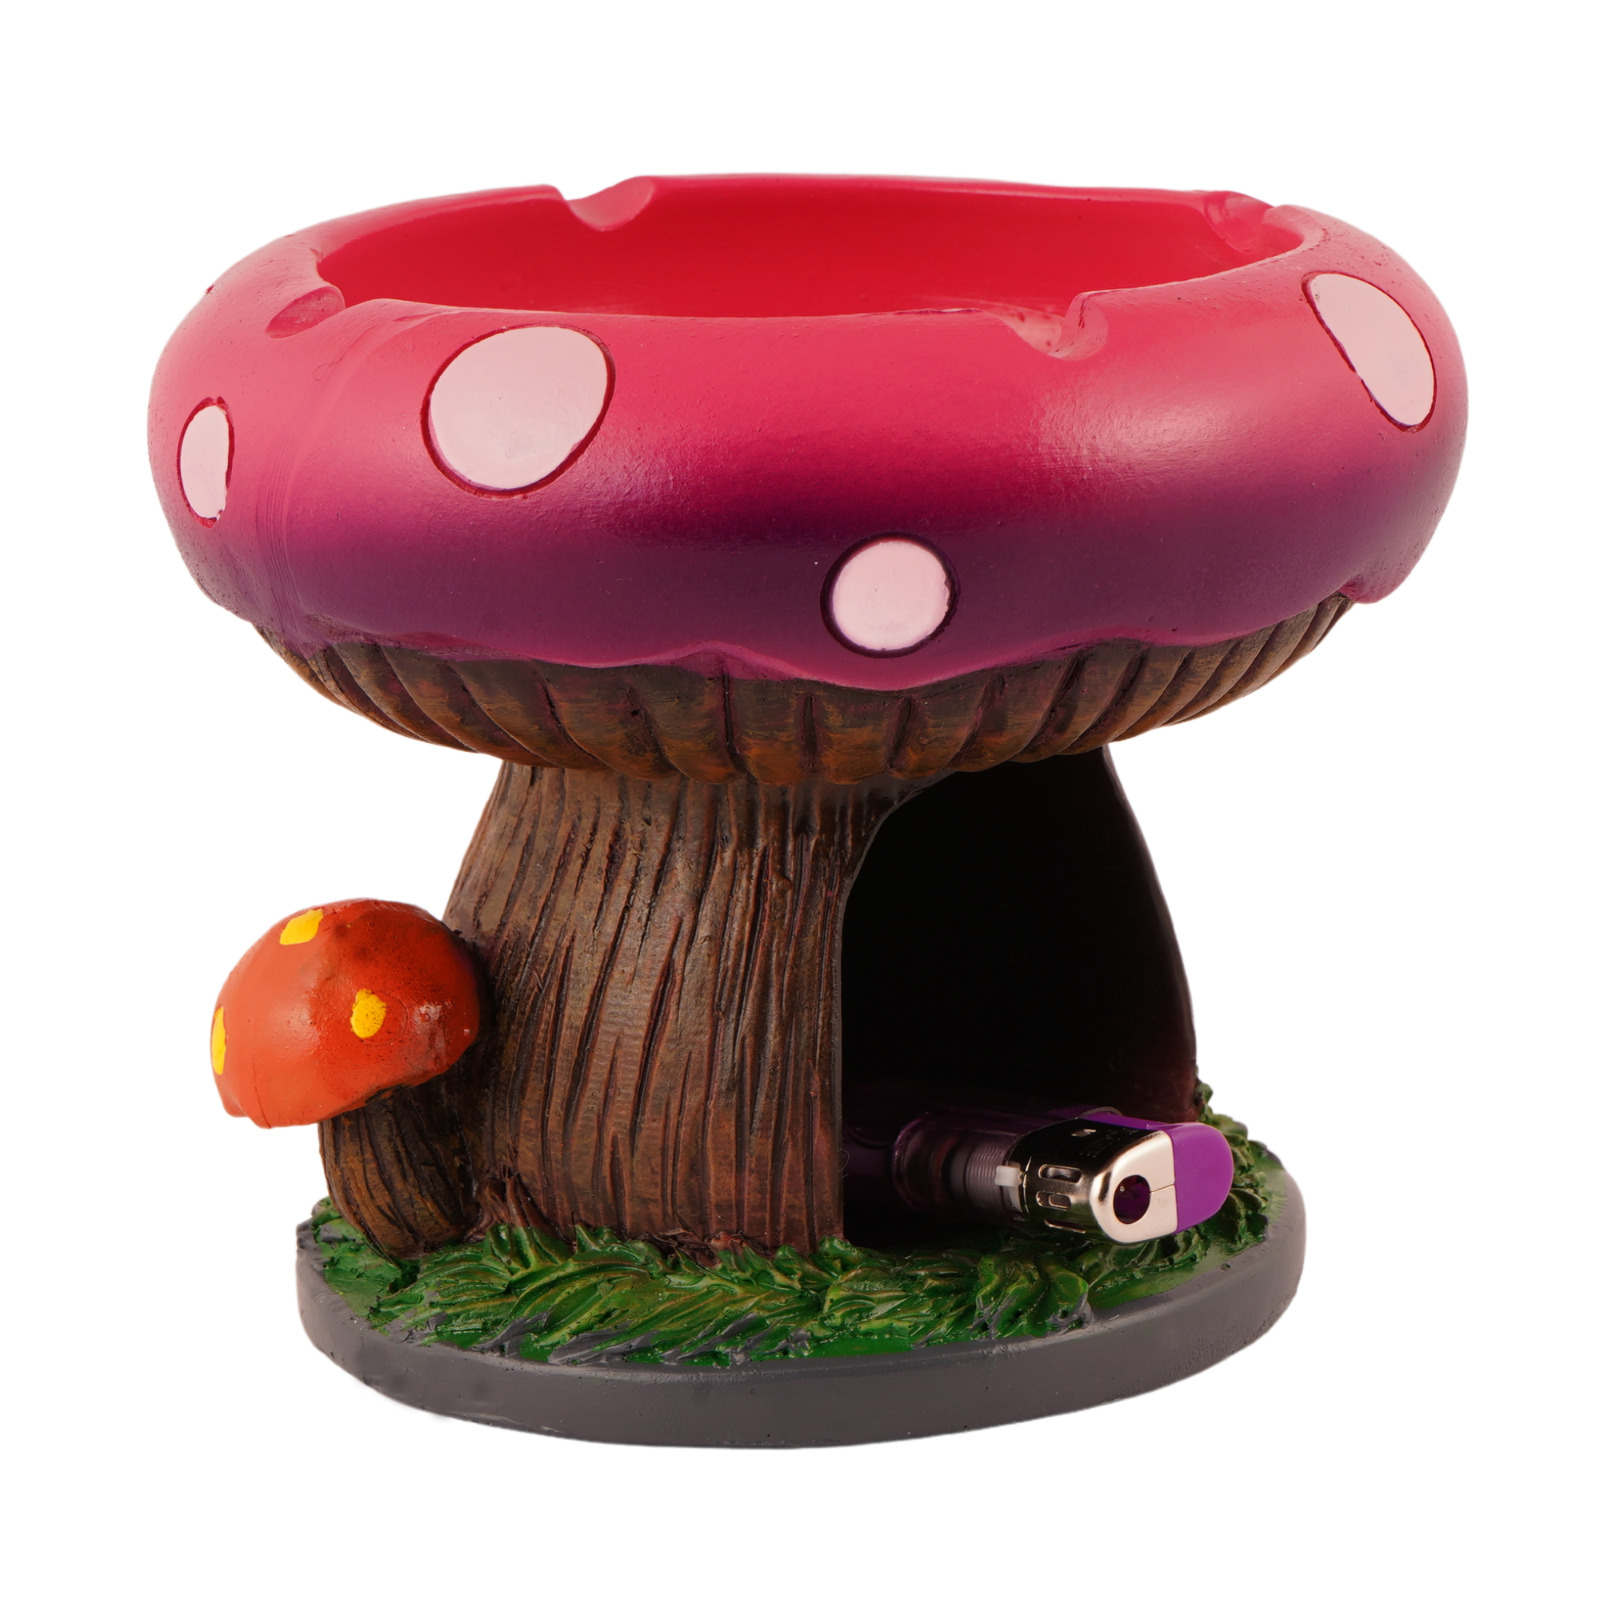 Mega Mushroom Ashtray - 4.5 Inches Tall, Lighter Stash Spot, Stylish Design - Id